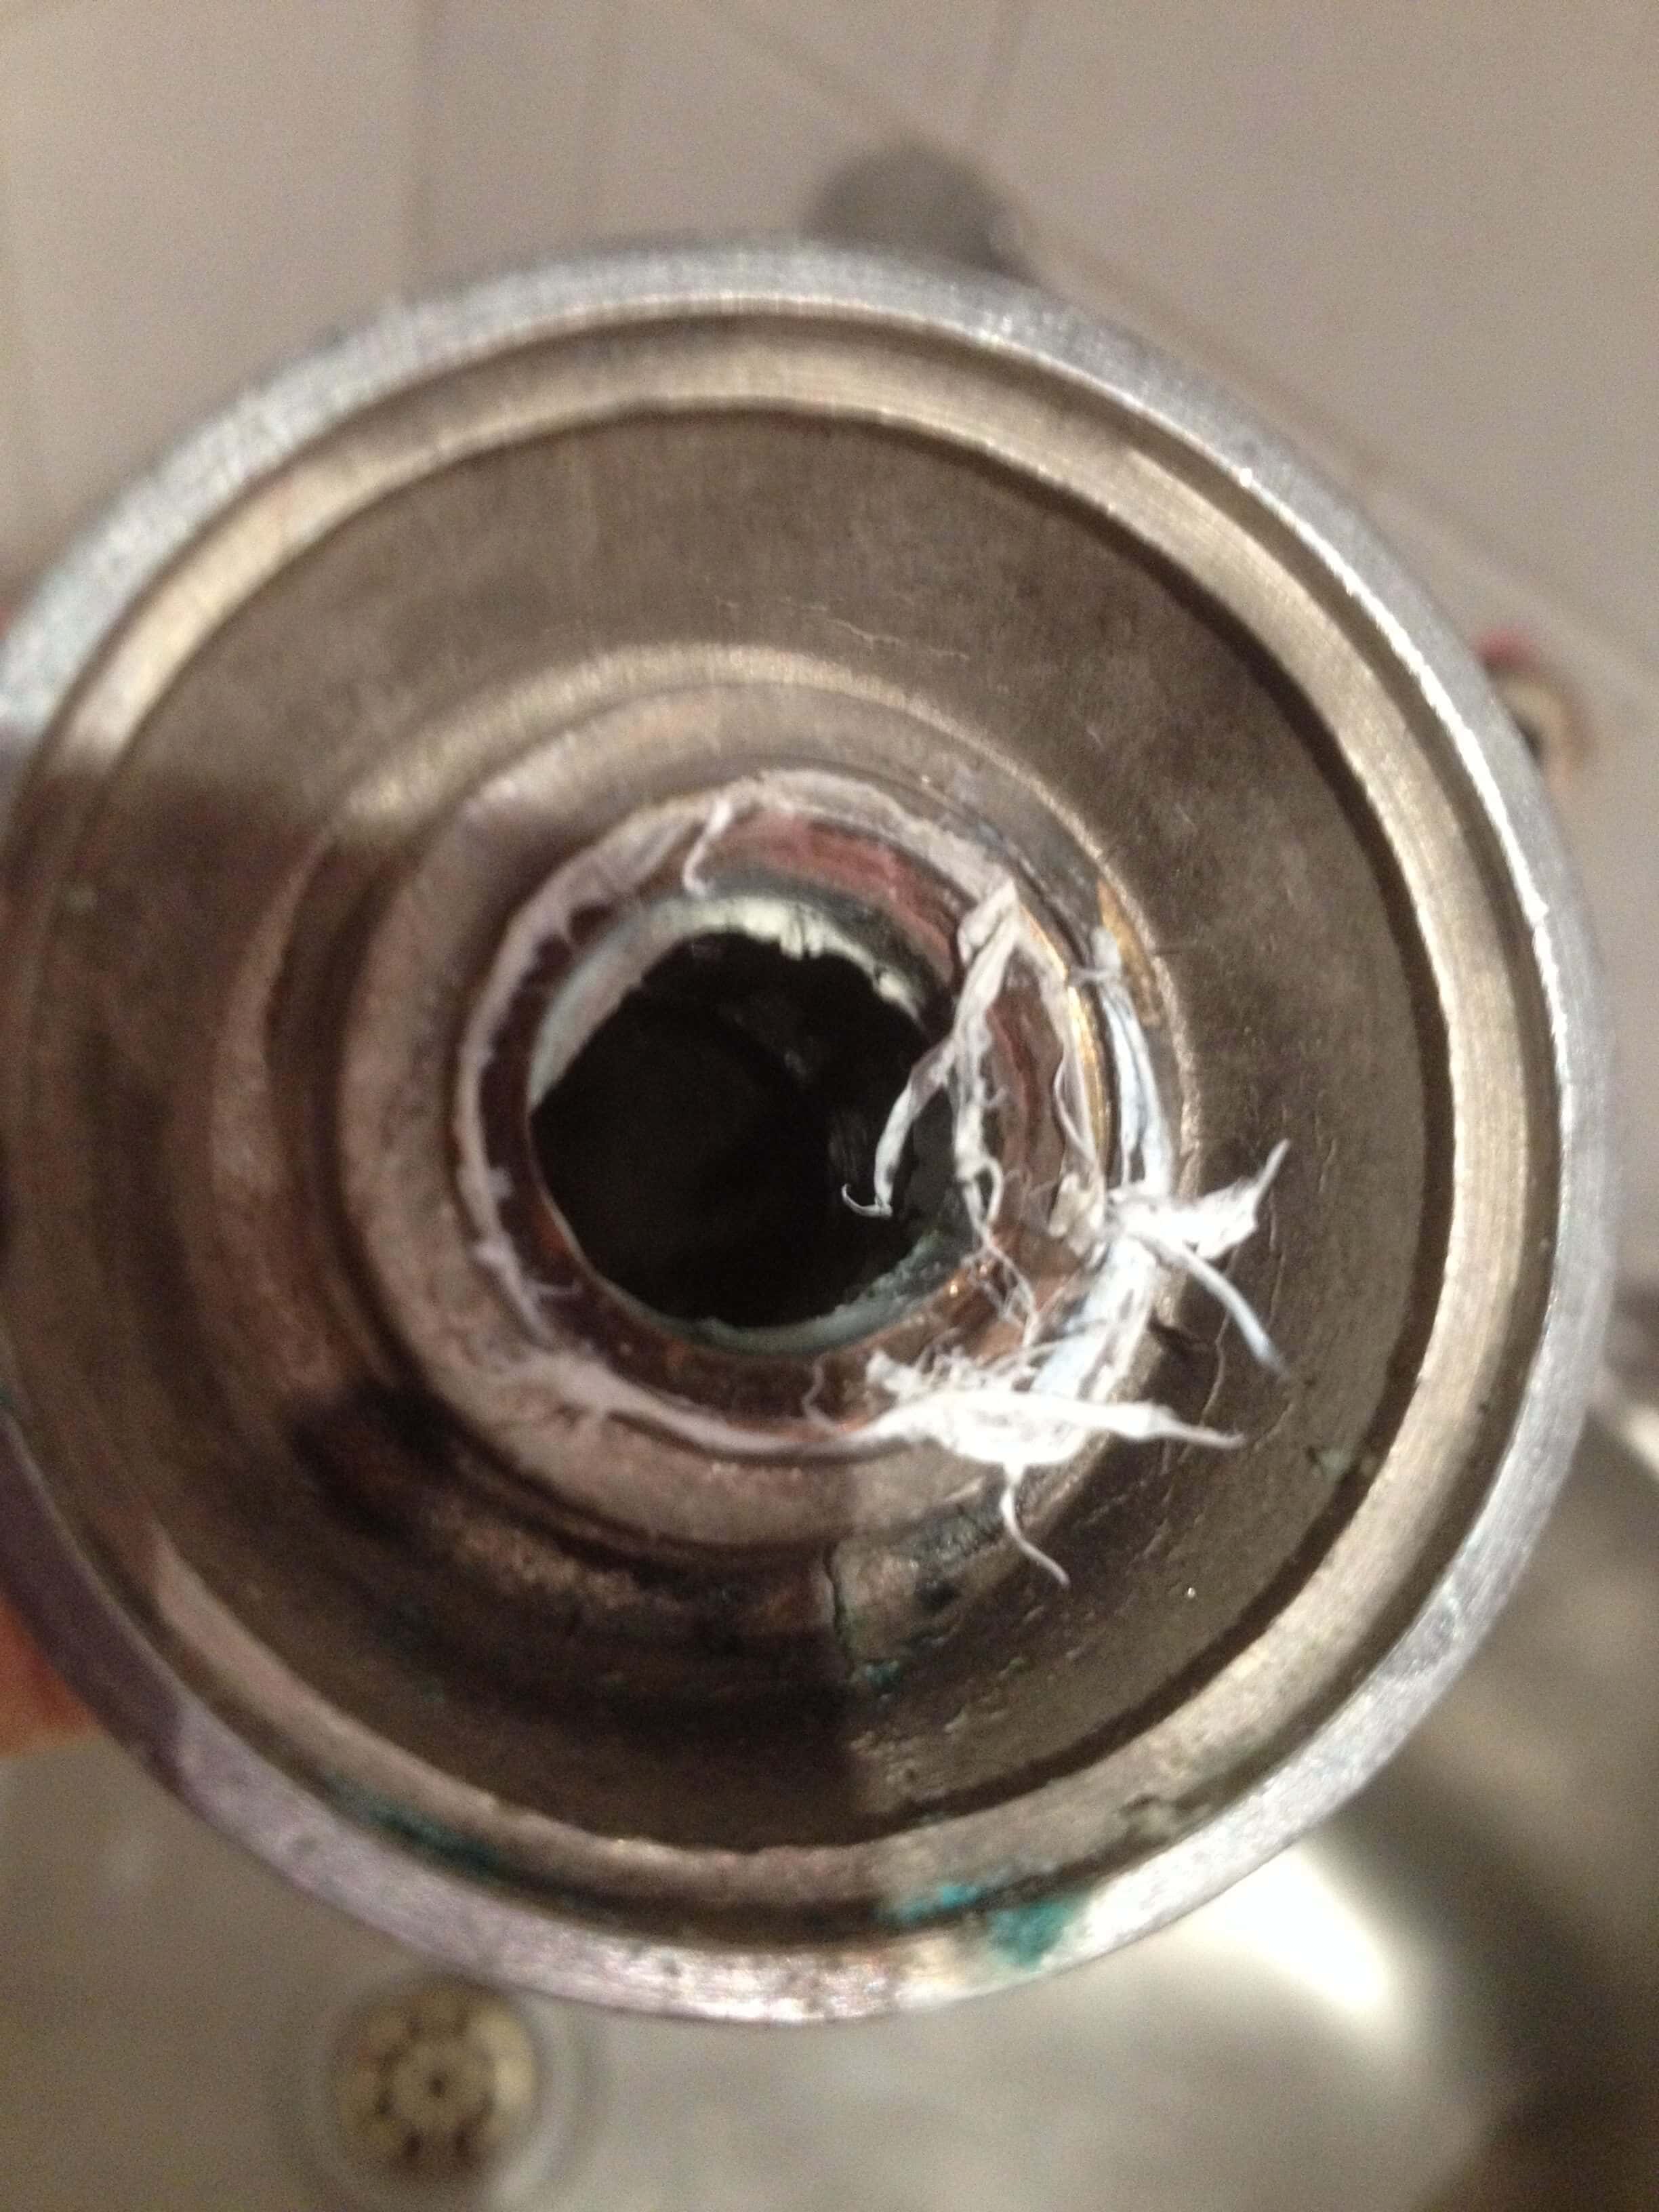 Everyday Plumbers Leaking Tap Repairs - Broken Tap Water Part2283